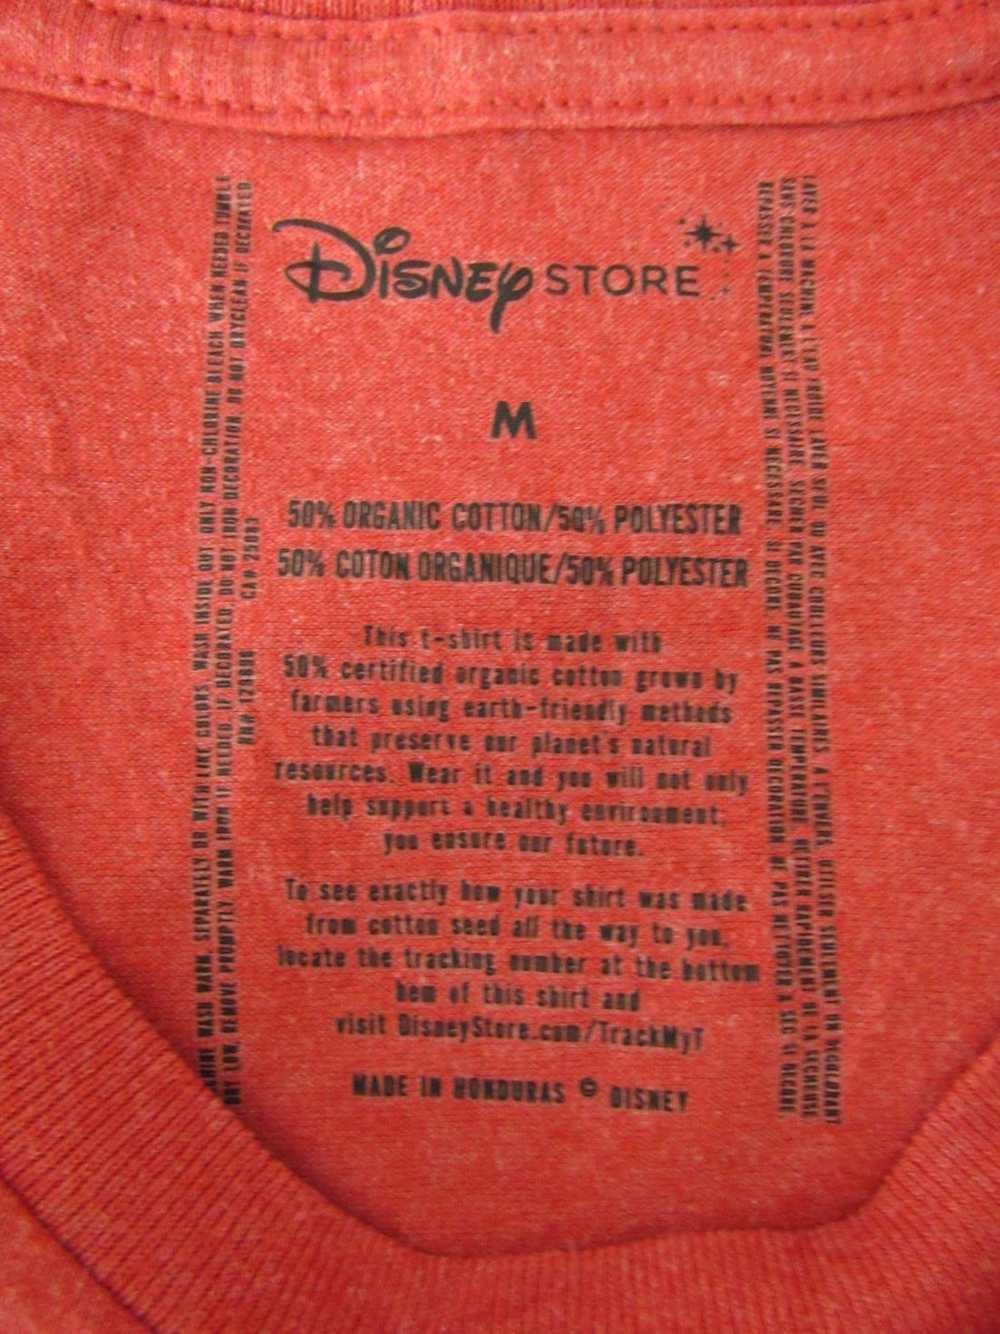 Disney Store T-Shirt Top - image 3